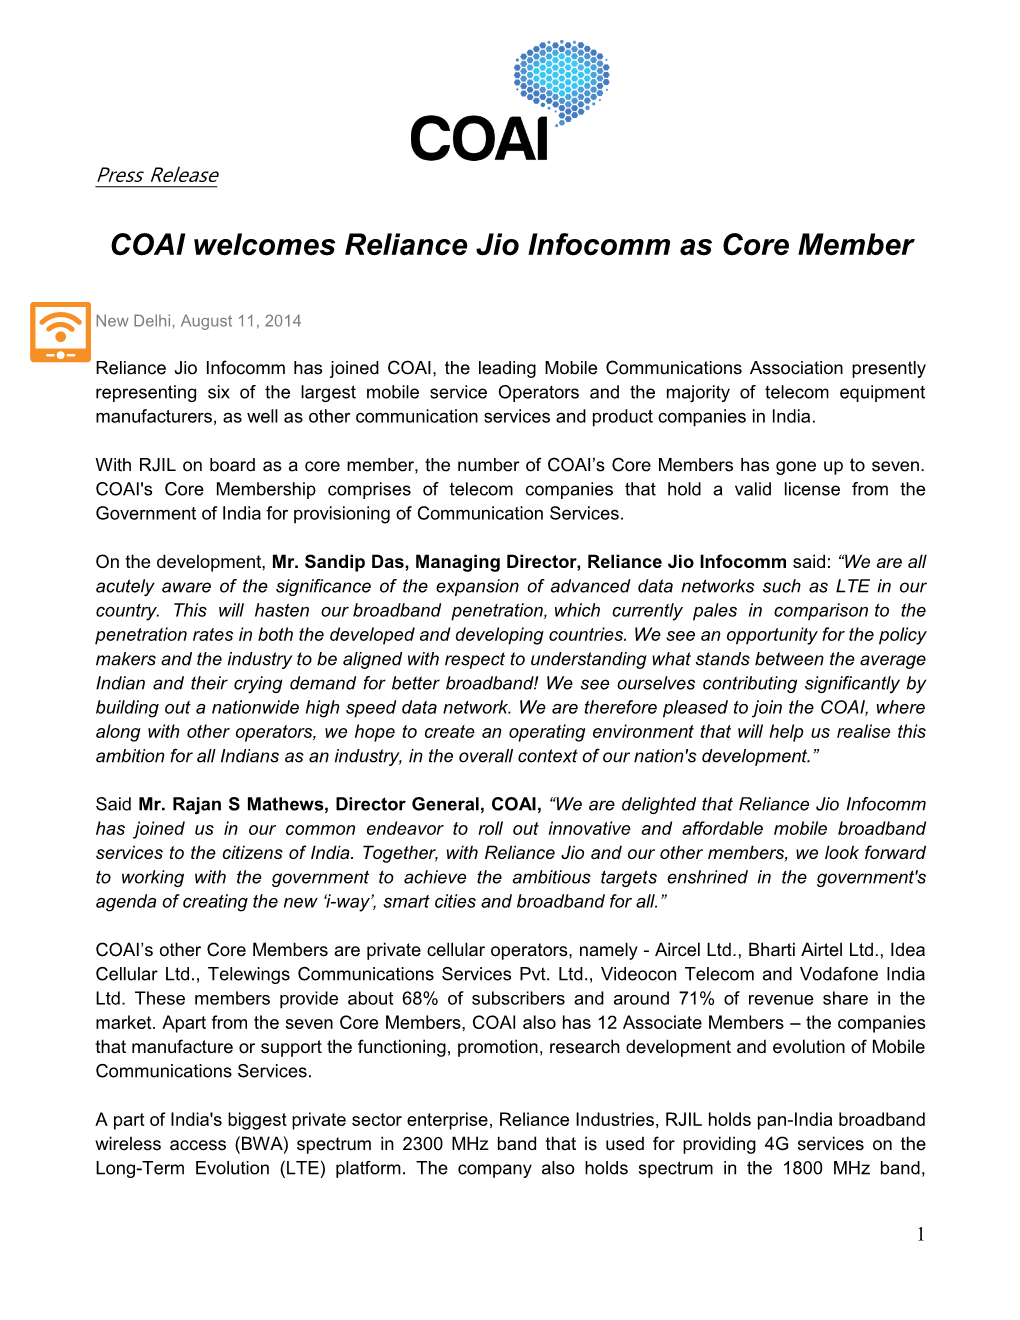 COAI Welcomes Reliance Jio Infocomm As Core Member